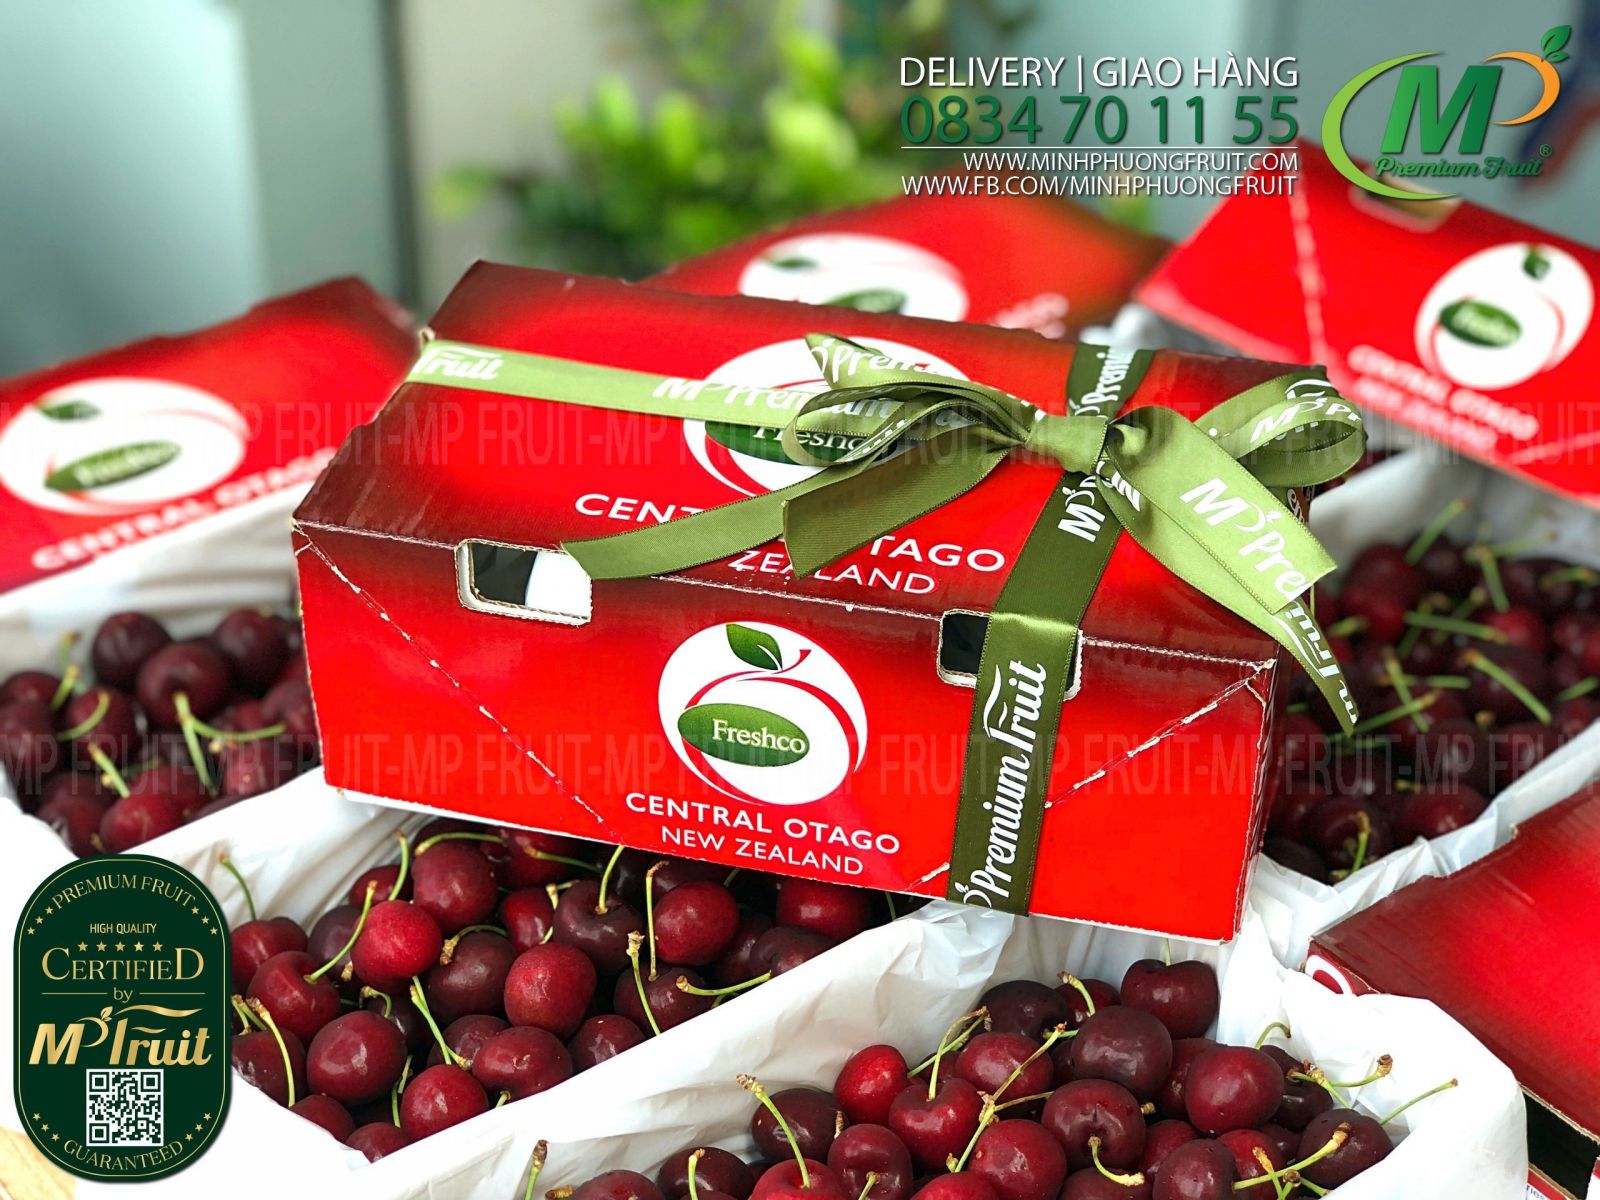 Cherry Đỏ New Zealand Size 30+ | Freshco - Hộp 2kg tại MP Fruit